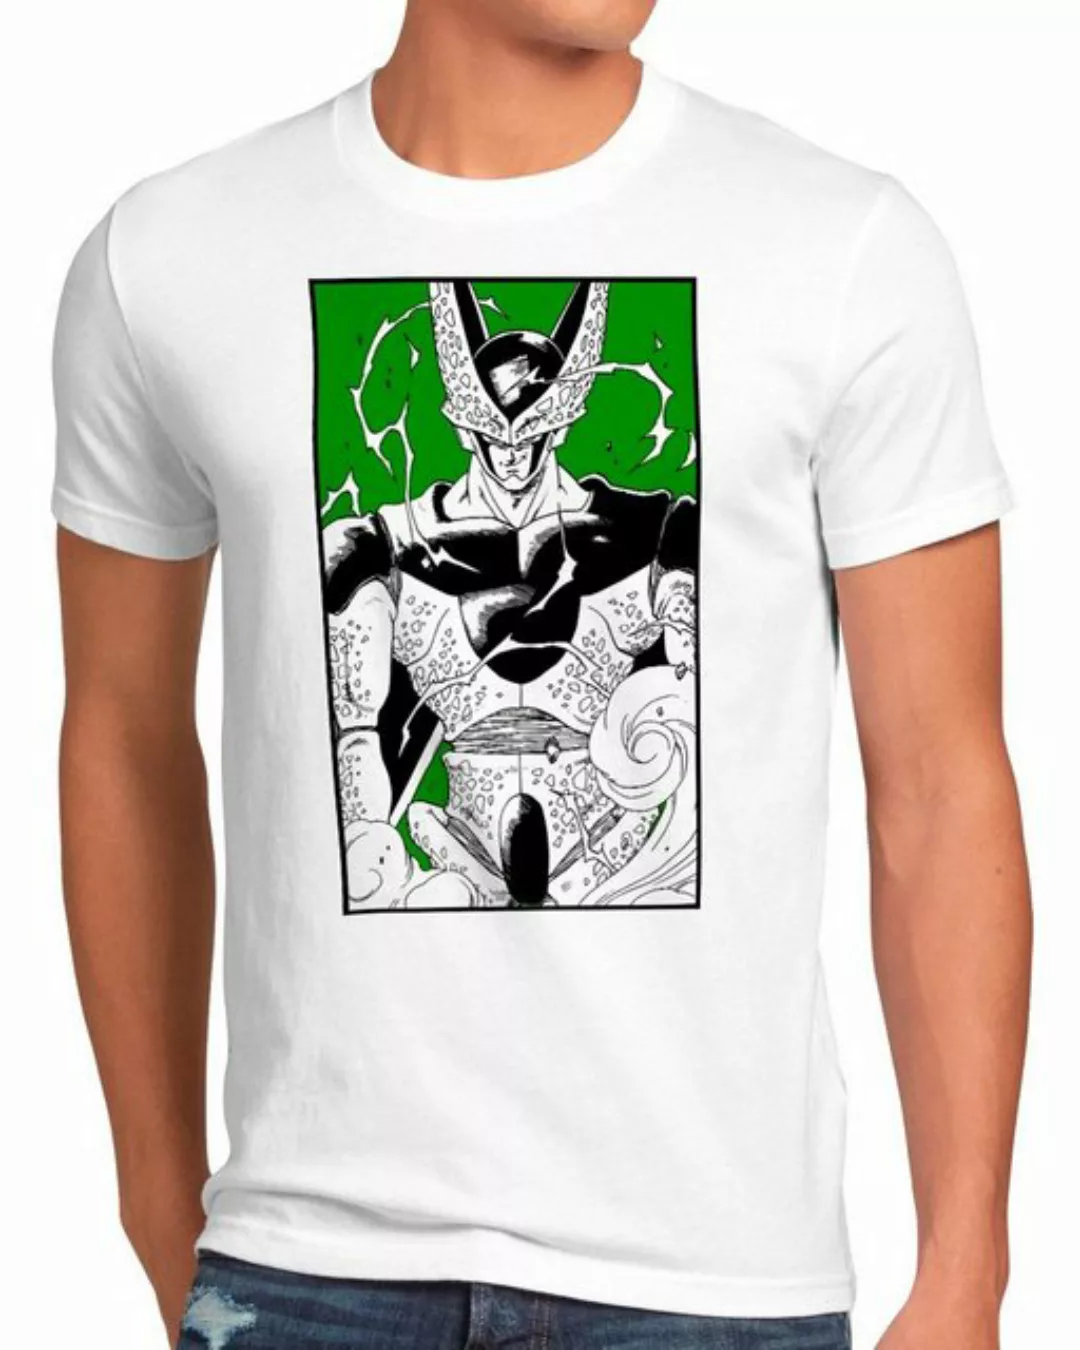 style3 Print-Shirt Herren T-Shirt Overwhelming Cell super dragonball z gt s günstig online kaufen